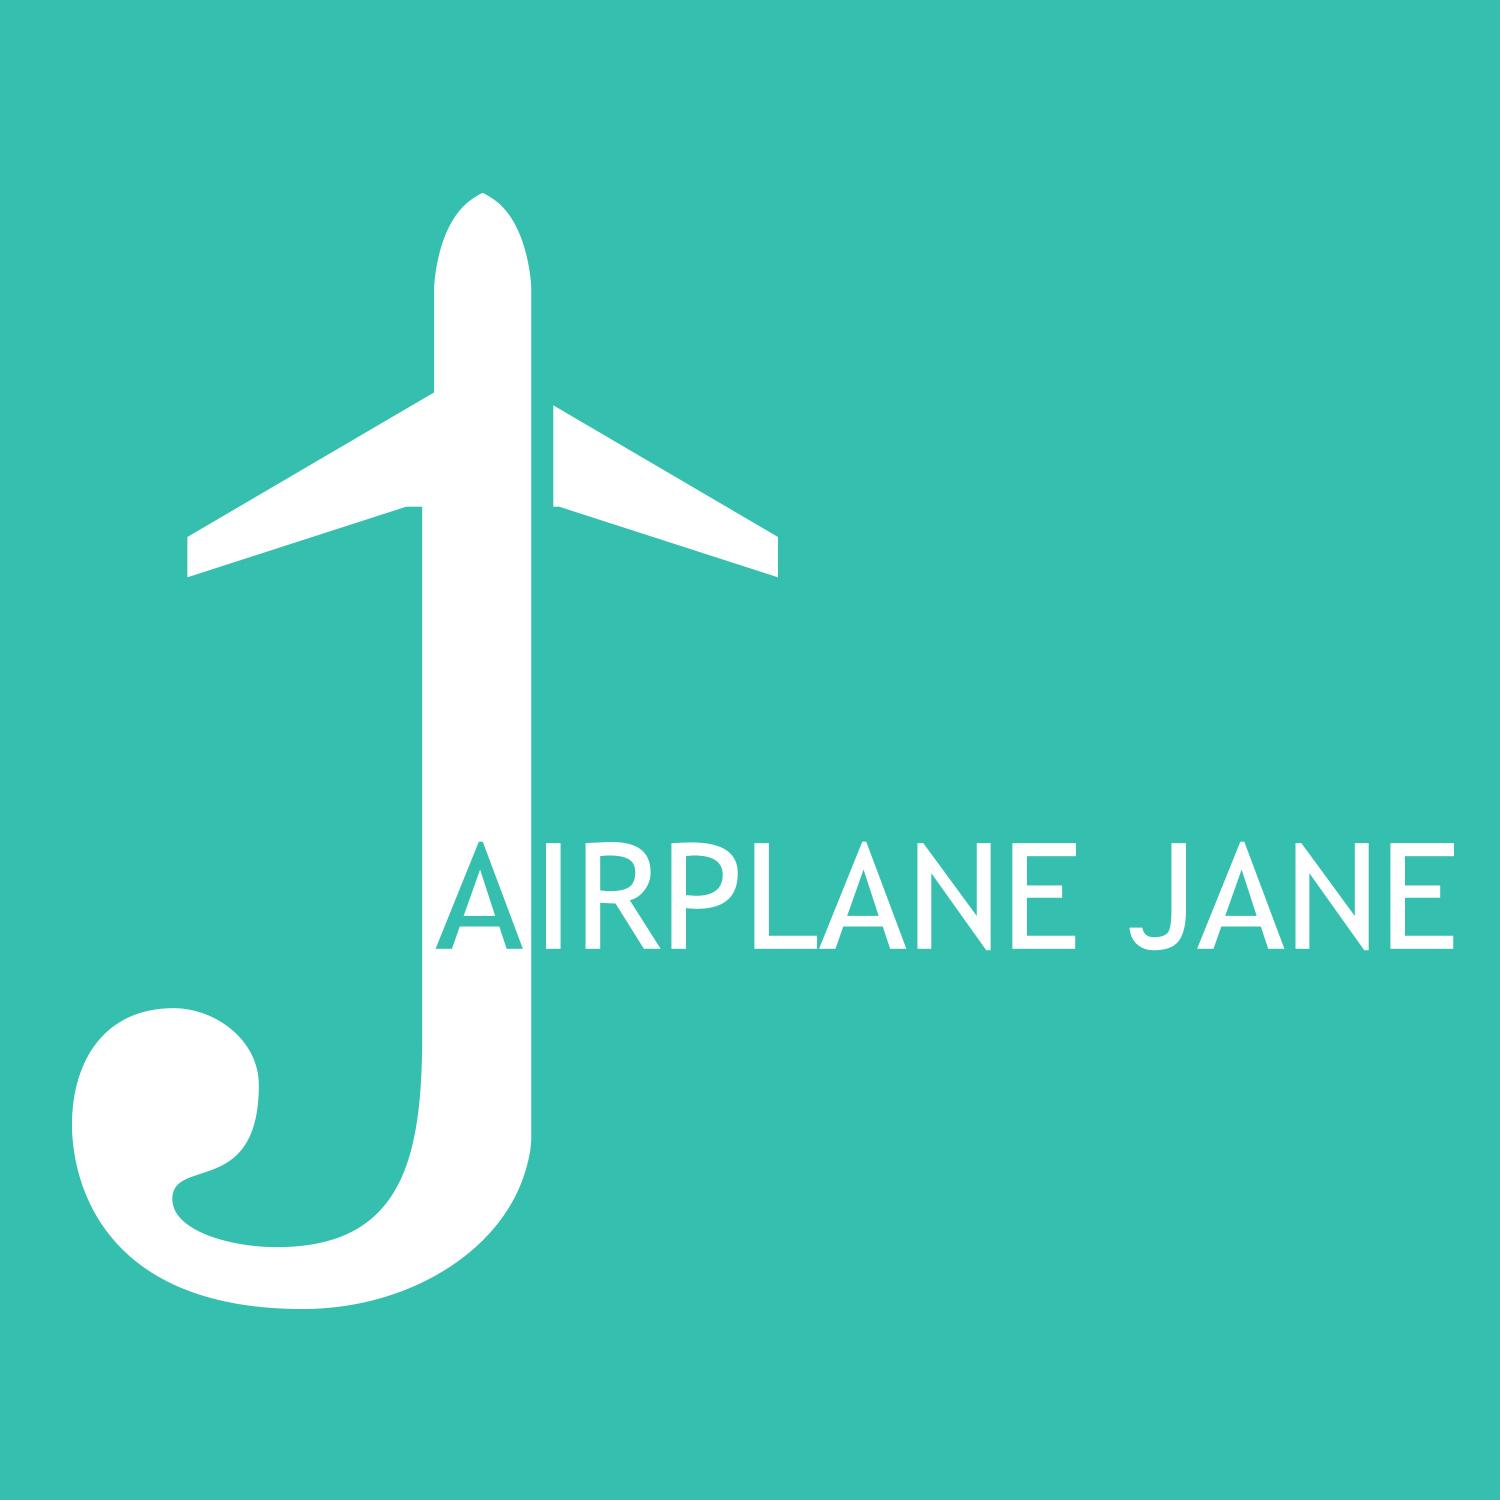 Jane Logo - ARCADE | AIRPLANE JANE LOGO